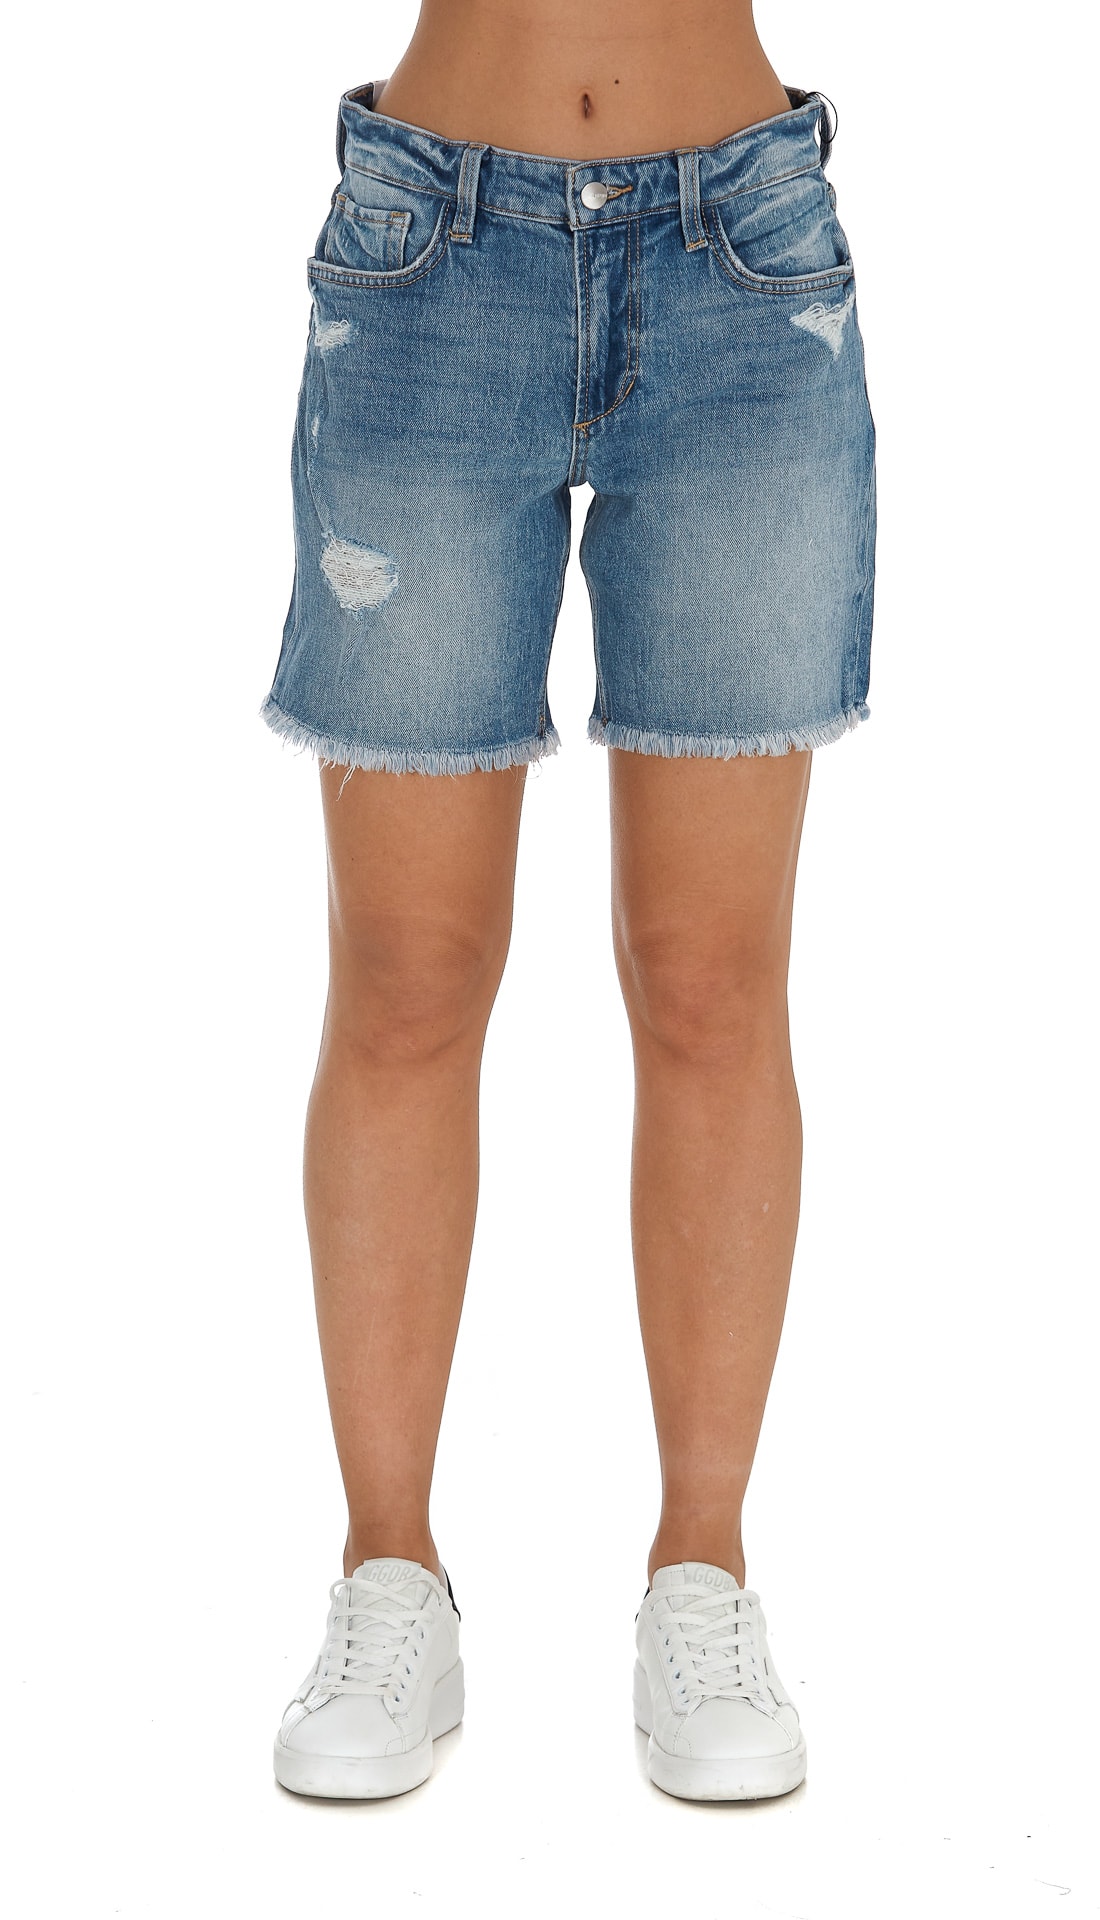 Joes Jeans Indiana Denim Shorts